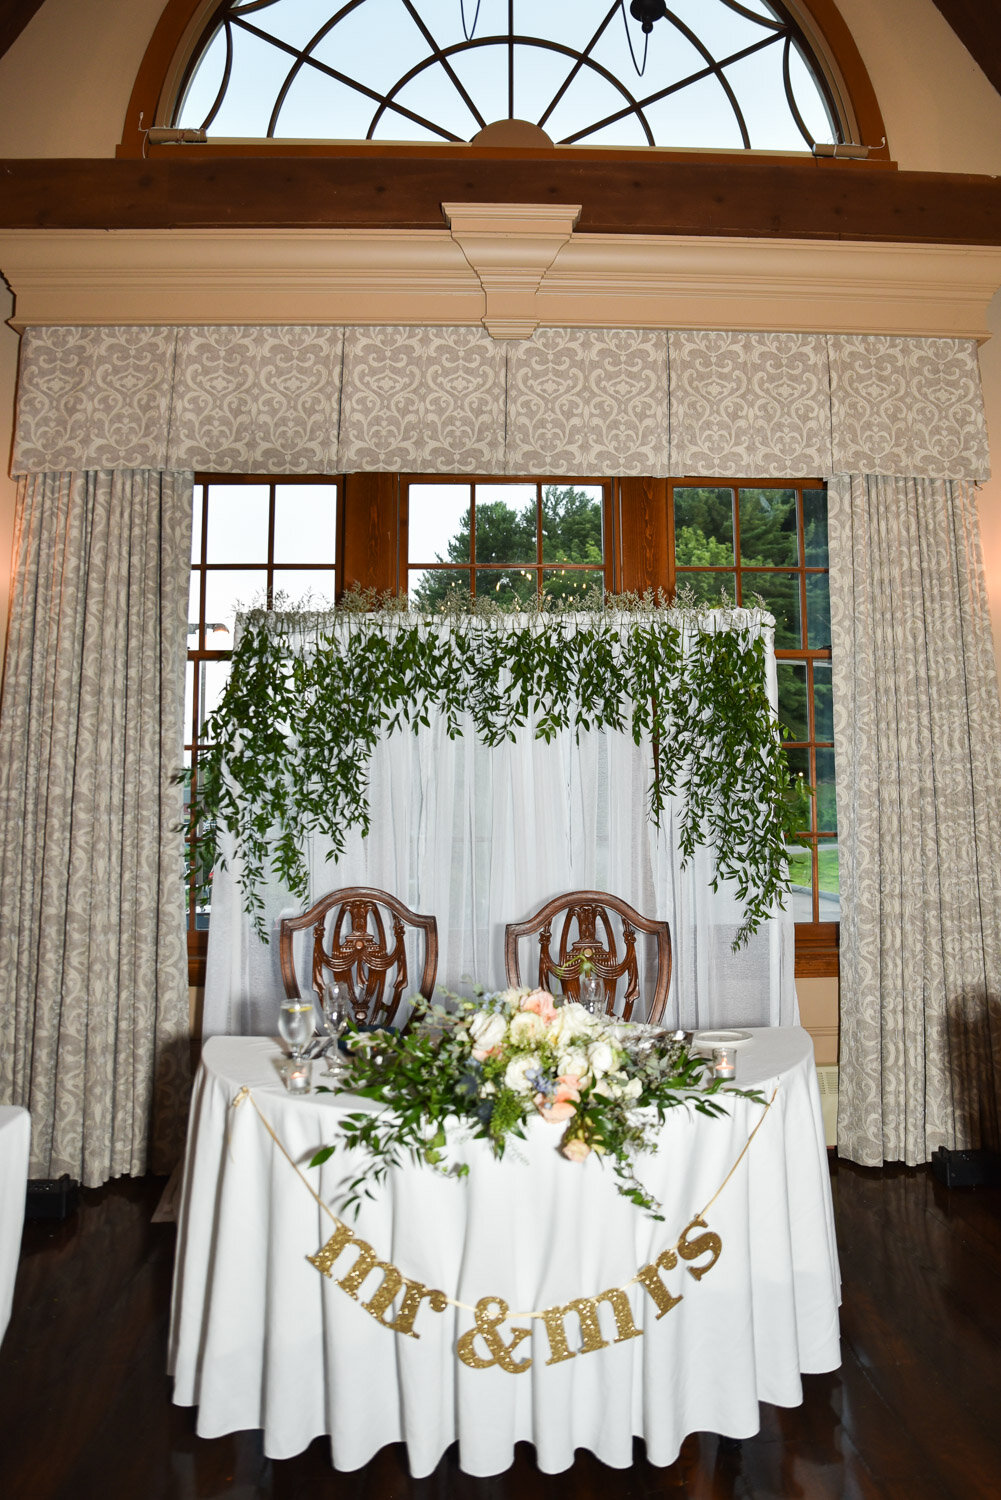 Cullen-Stellberger wedding at the Publick House Historic Inn